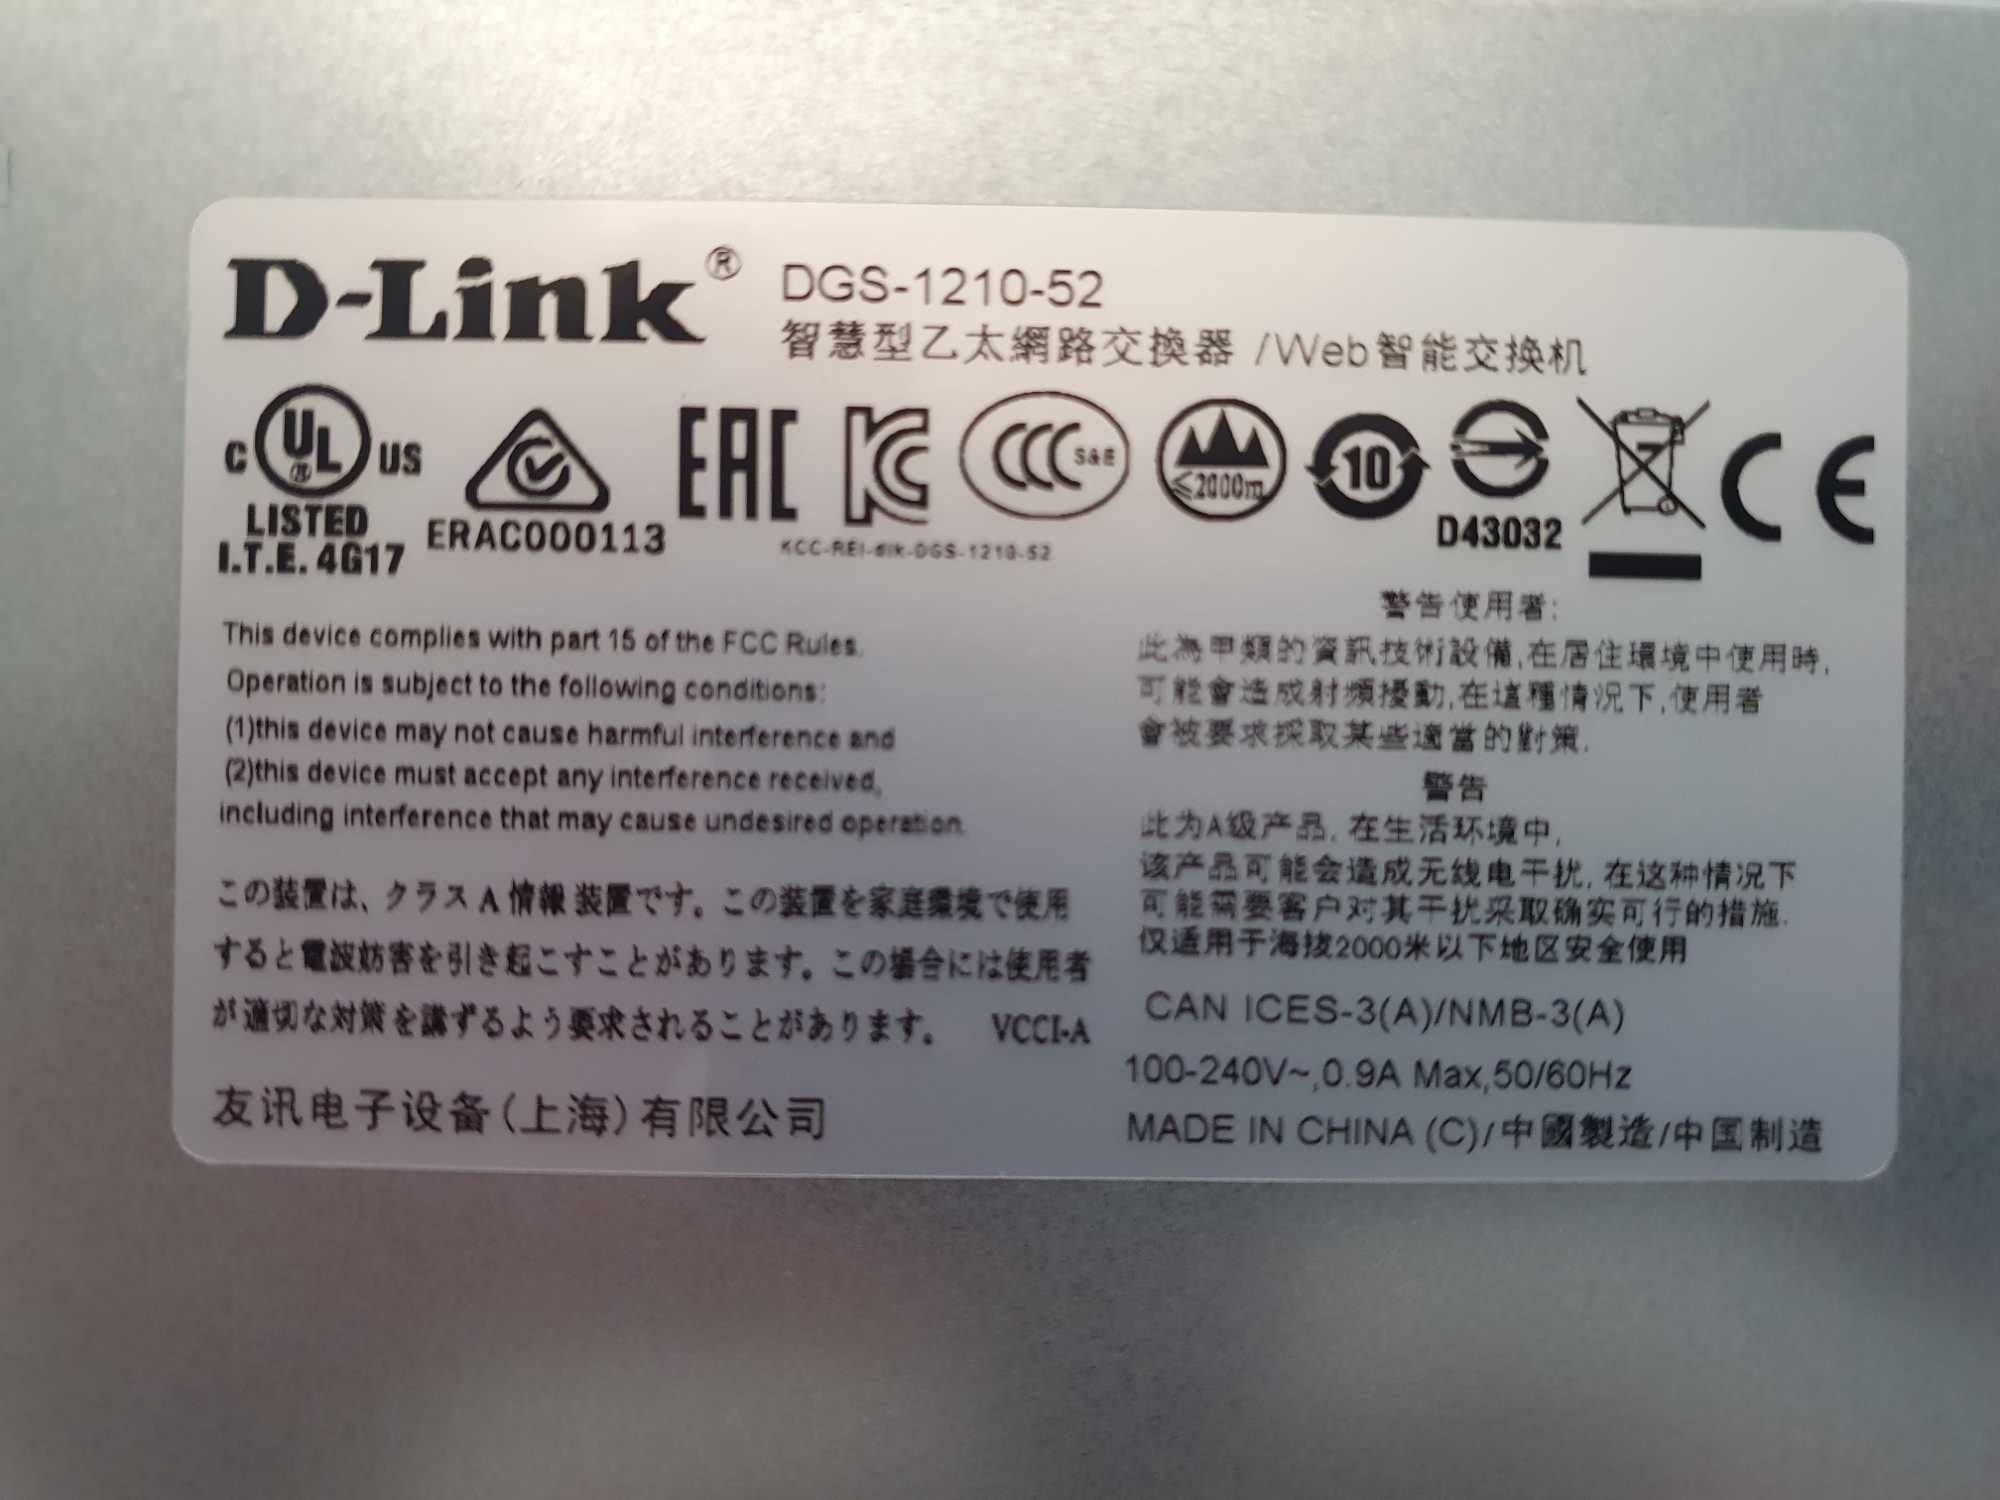 Switch DLink DGS-1210-52